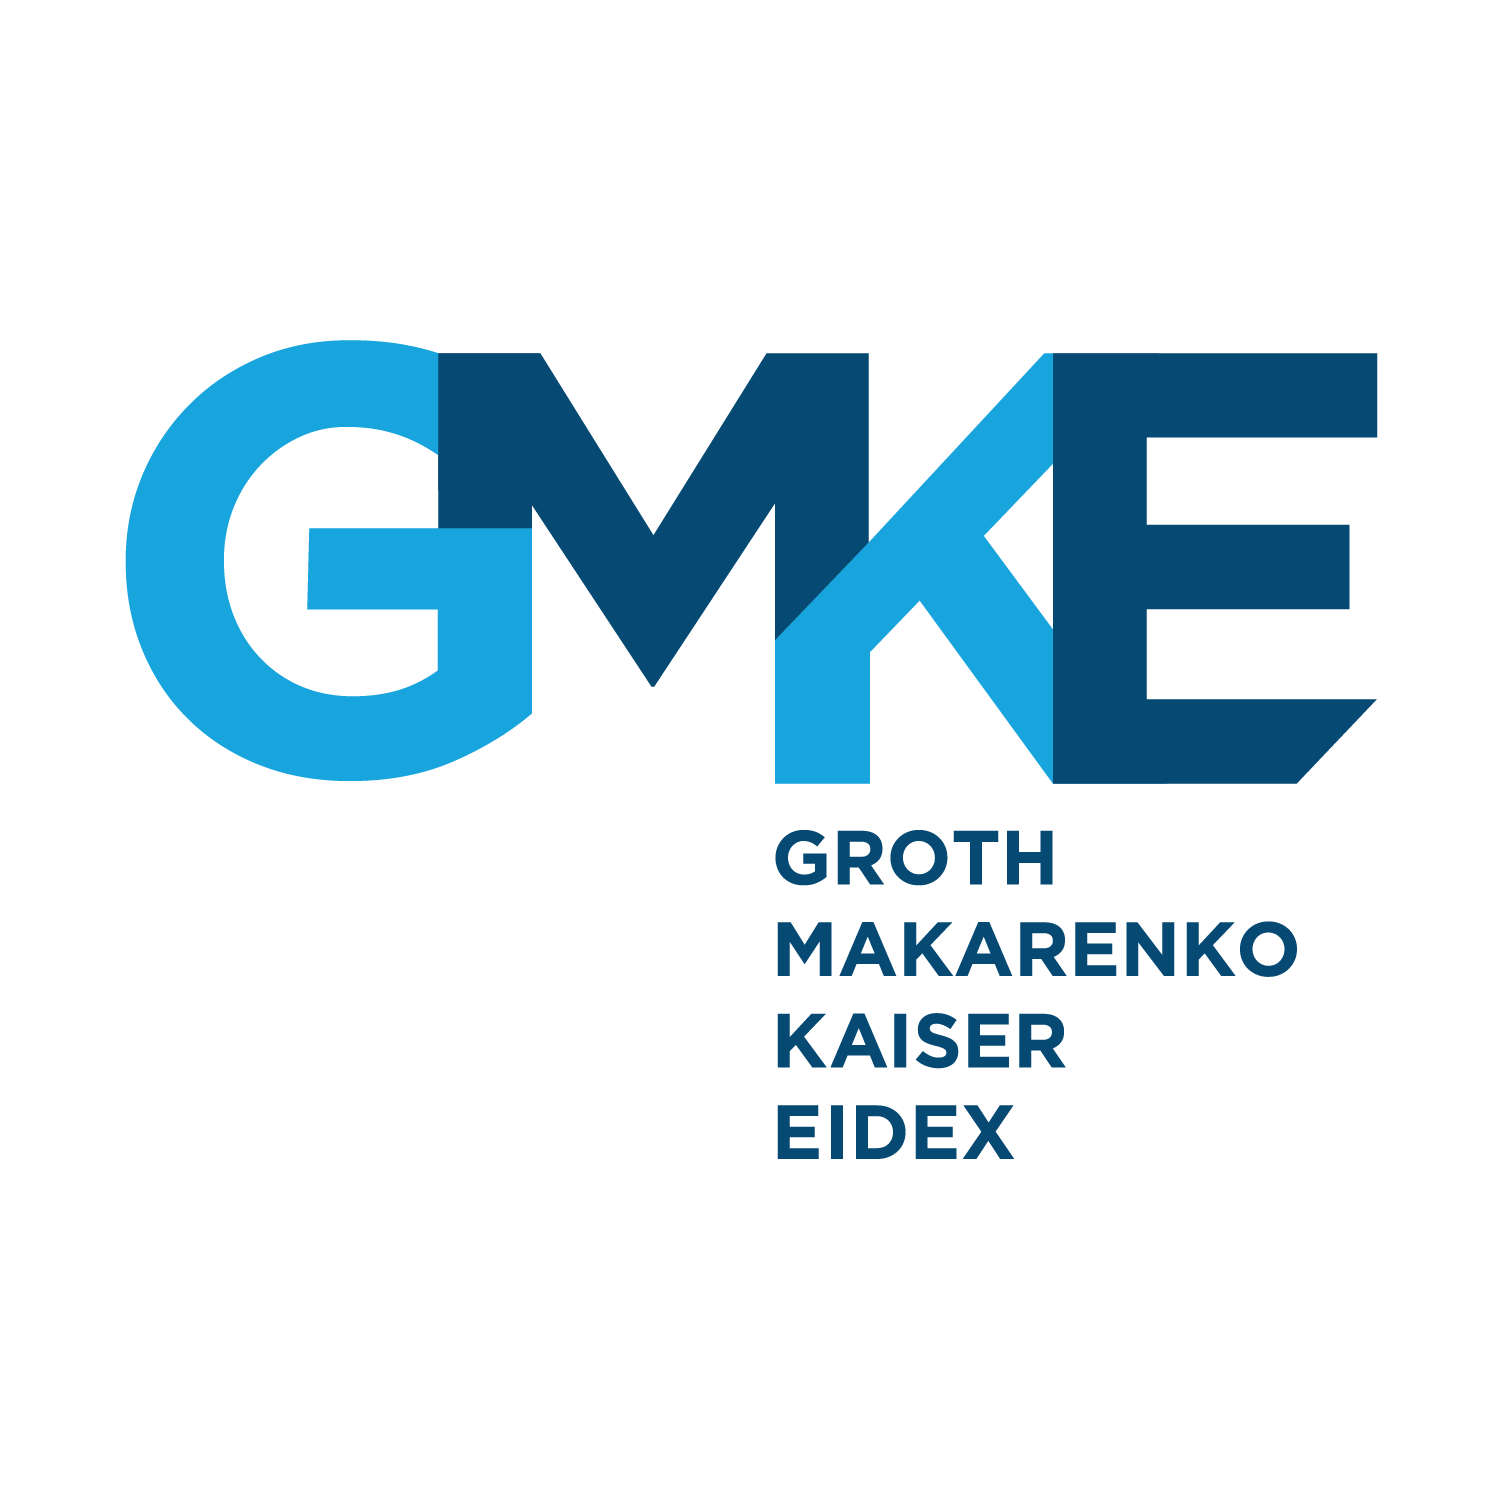 GMKE logo-01.png